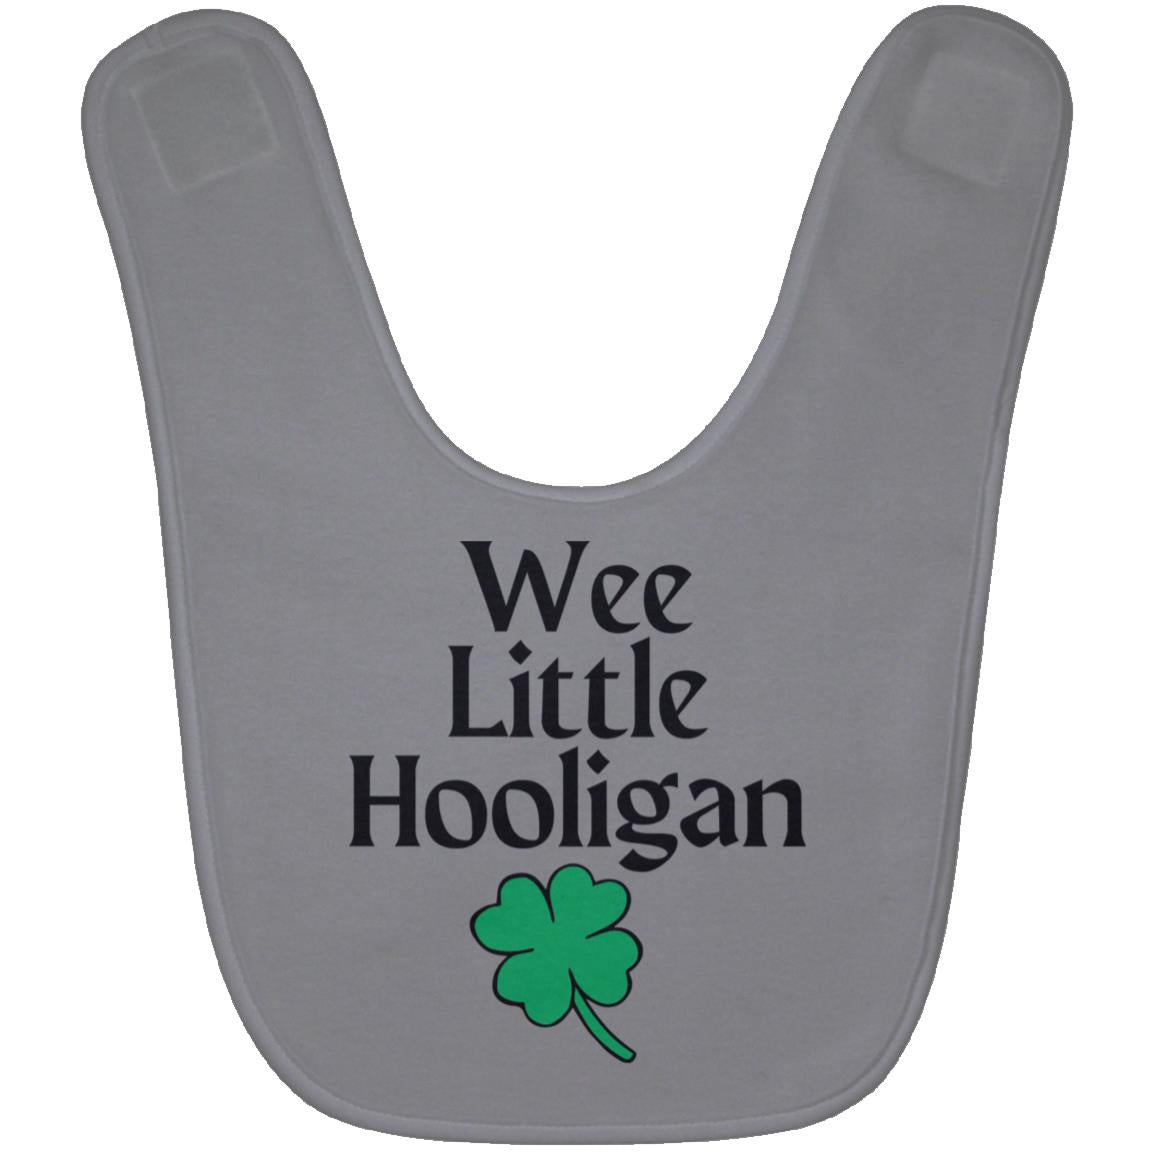 We Little Hooligan (St. Patrick's Day) - Baby Bib